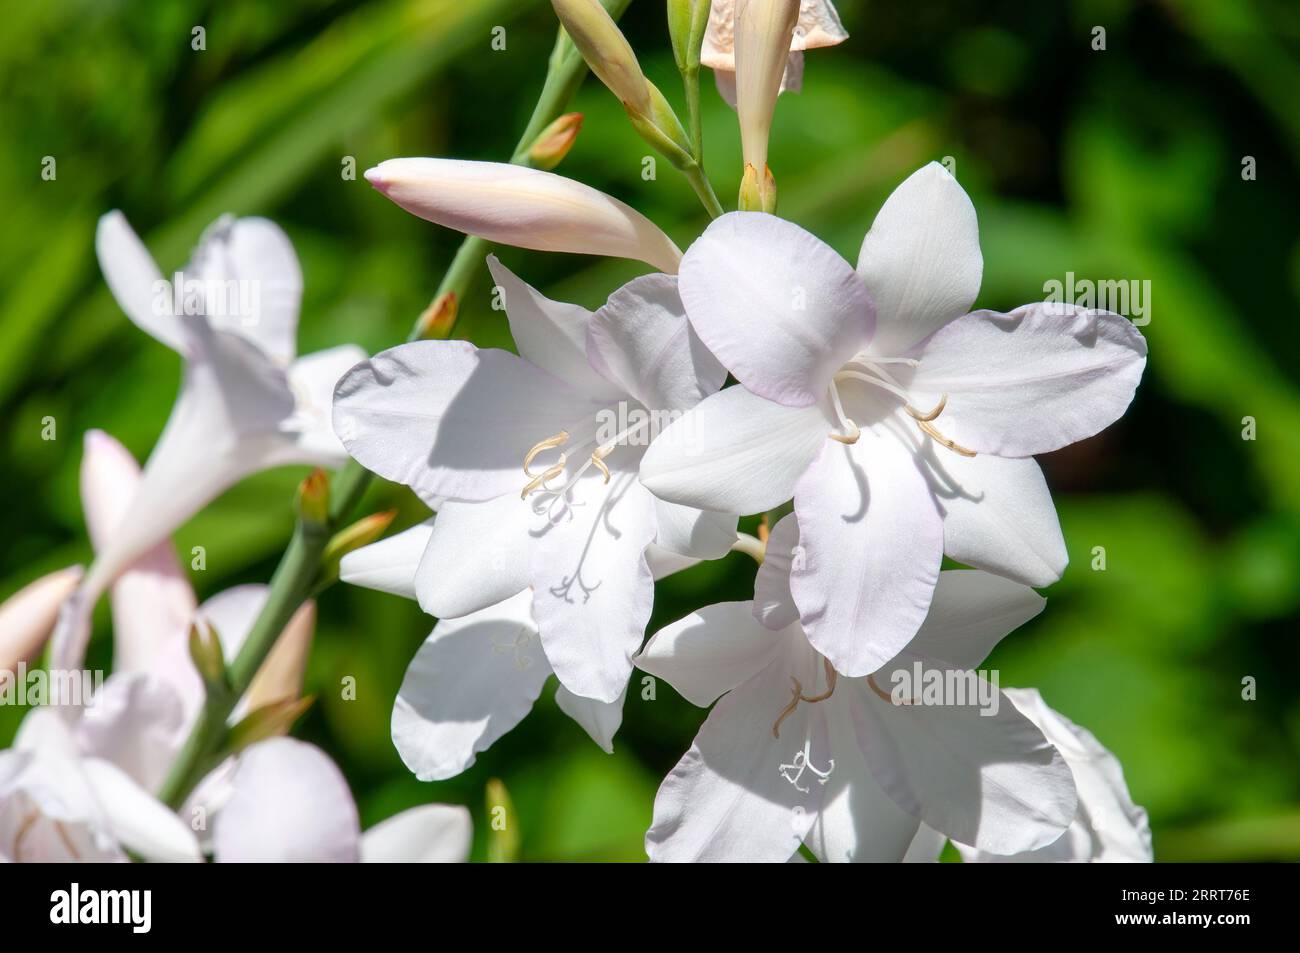 Sydney Australia, close-up whitish flowers of a cape bugle lily Stock Photo